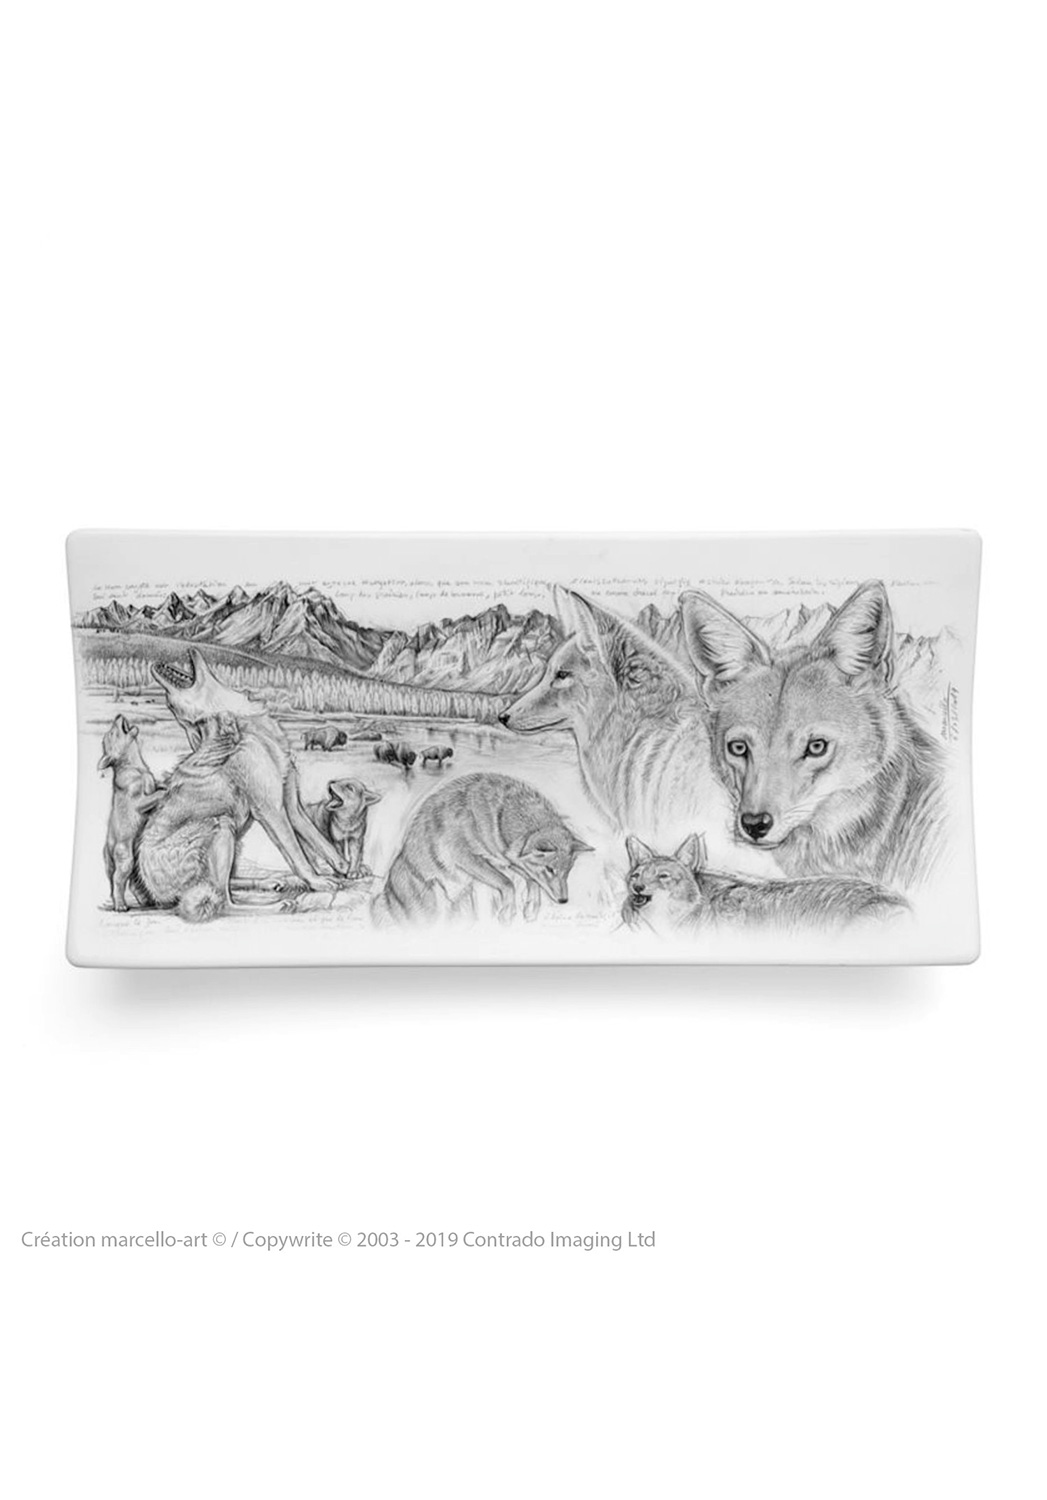 Marcello-art: Rectangular plates Rectangular plate 391 coyote